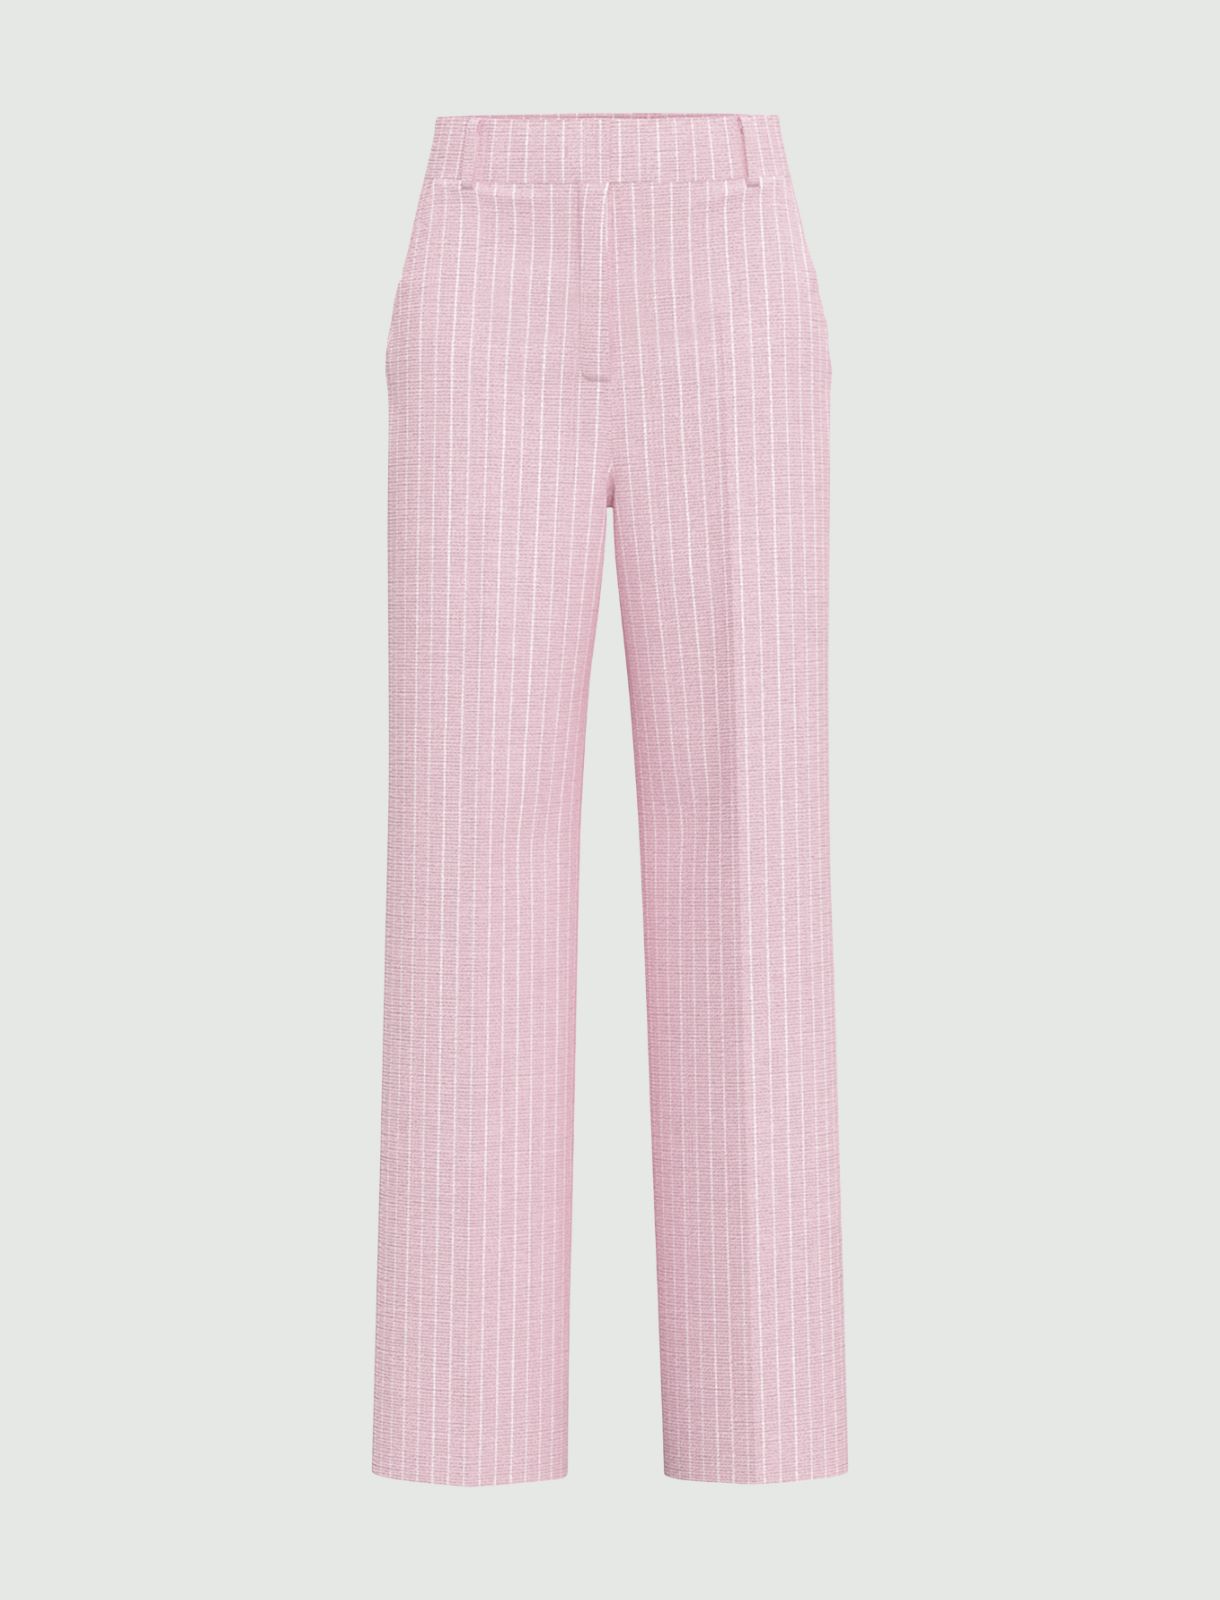 Pantalon à rayures tennis - Rose pastel - Marella - 4